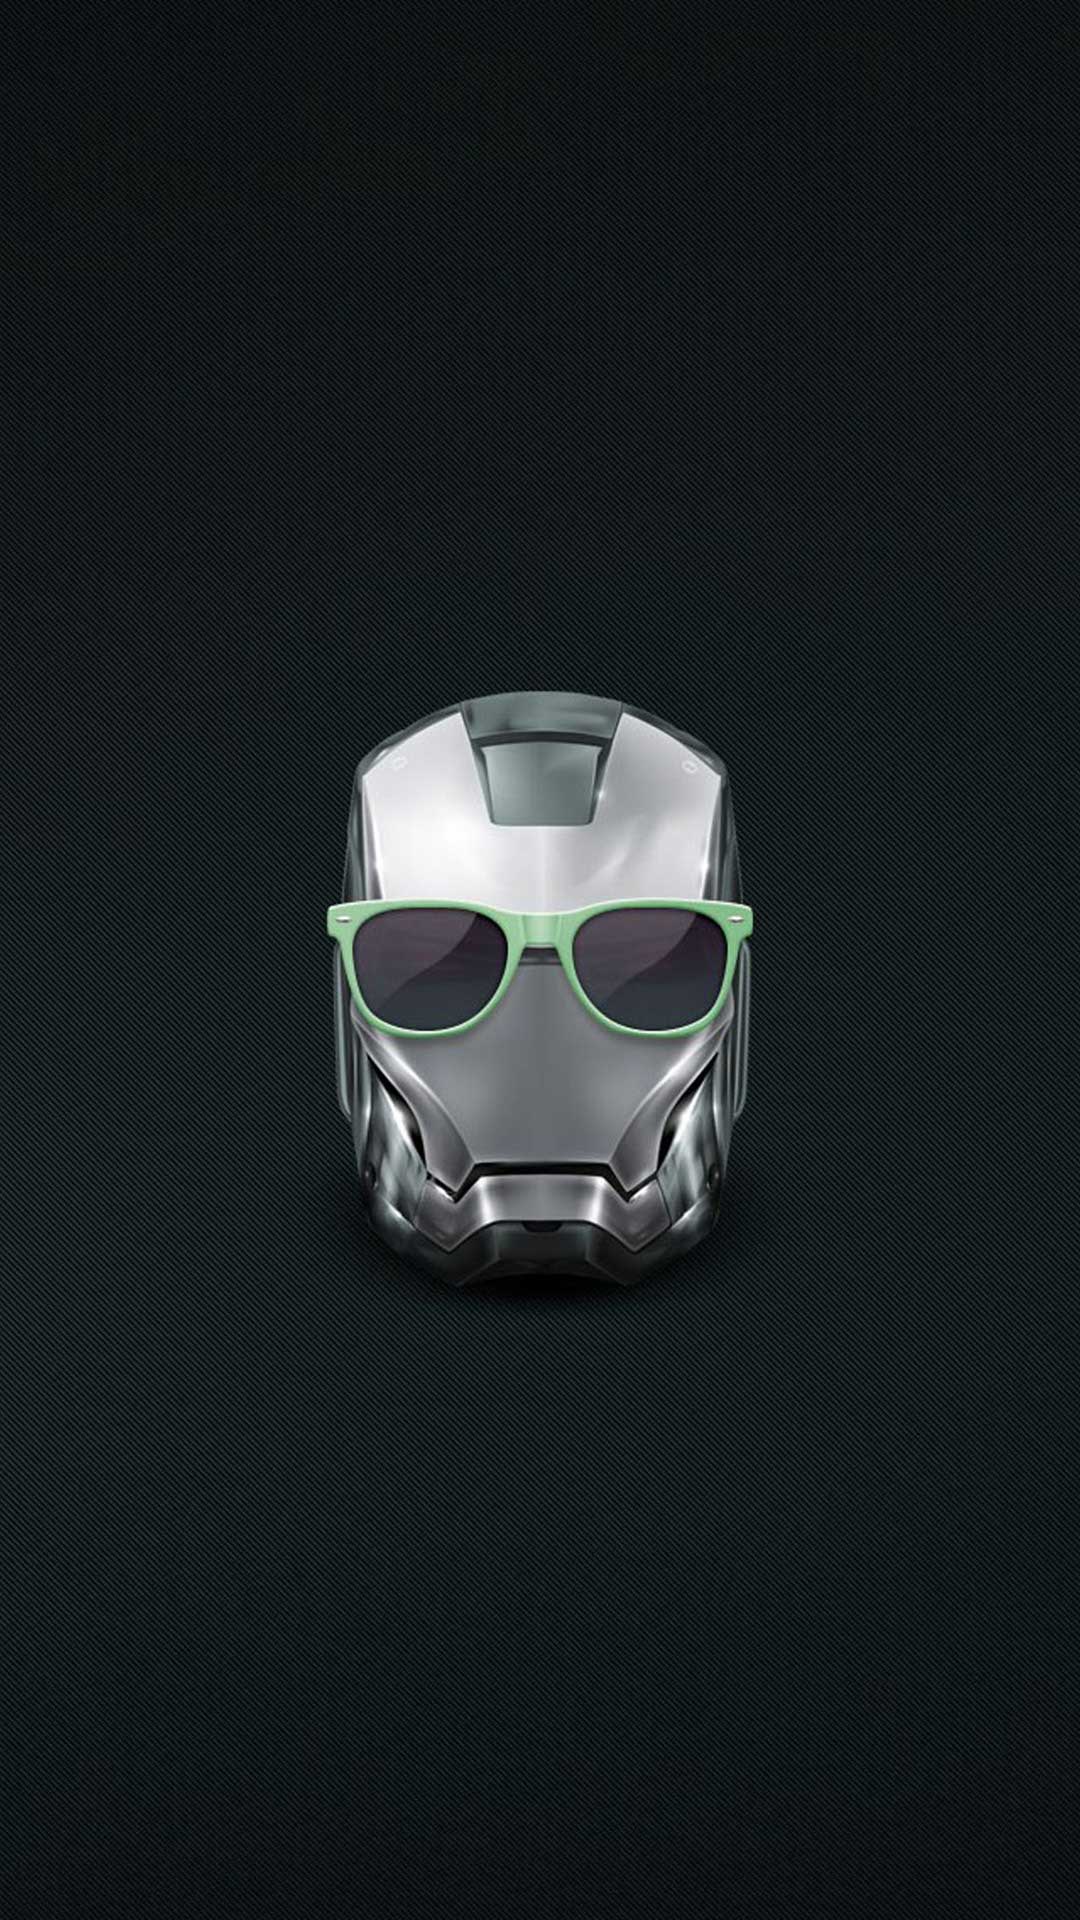 Iron man power source iphone wallpaper tumblr - One Punch Man